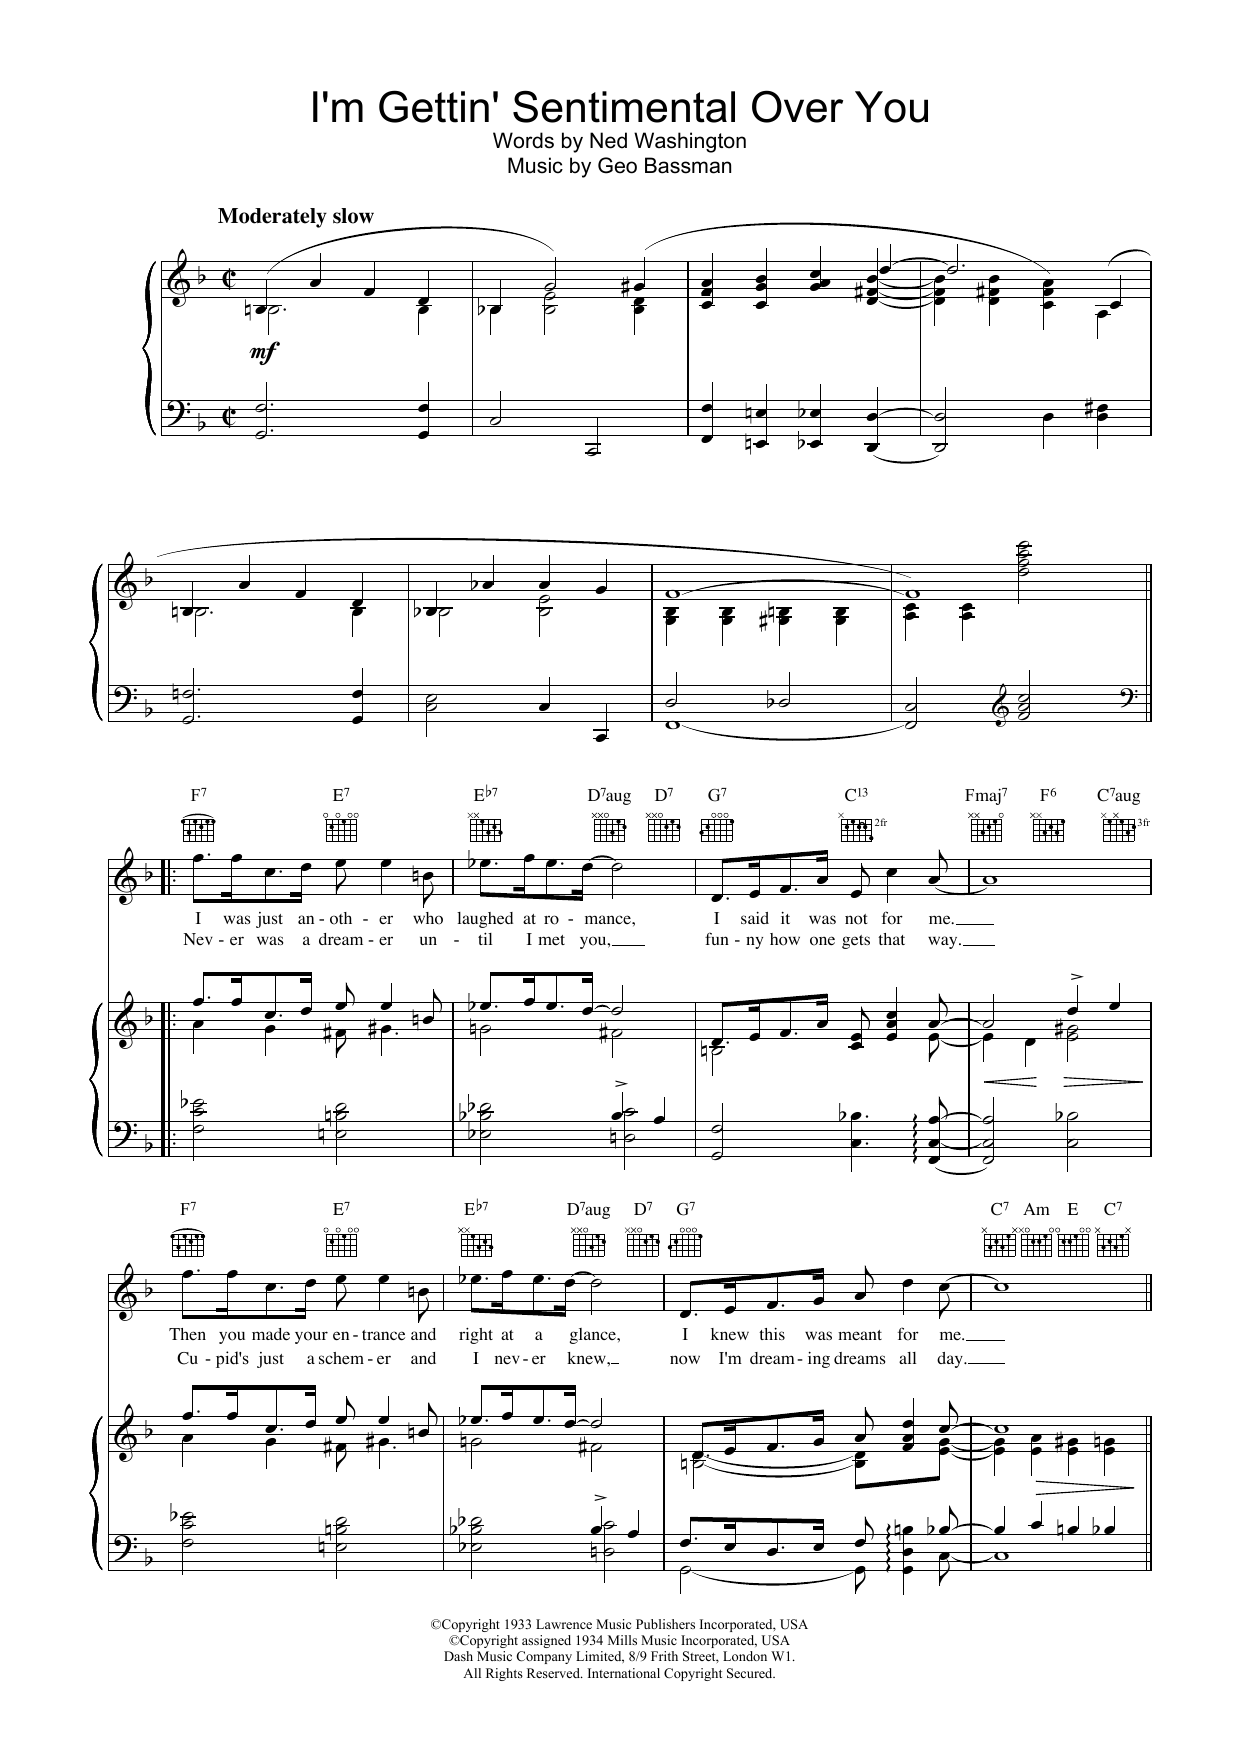 Frank Sinatra I'm Gettin' Sentimental Over You sheet music notes printable PDF score